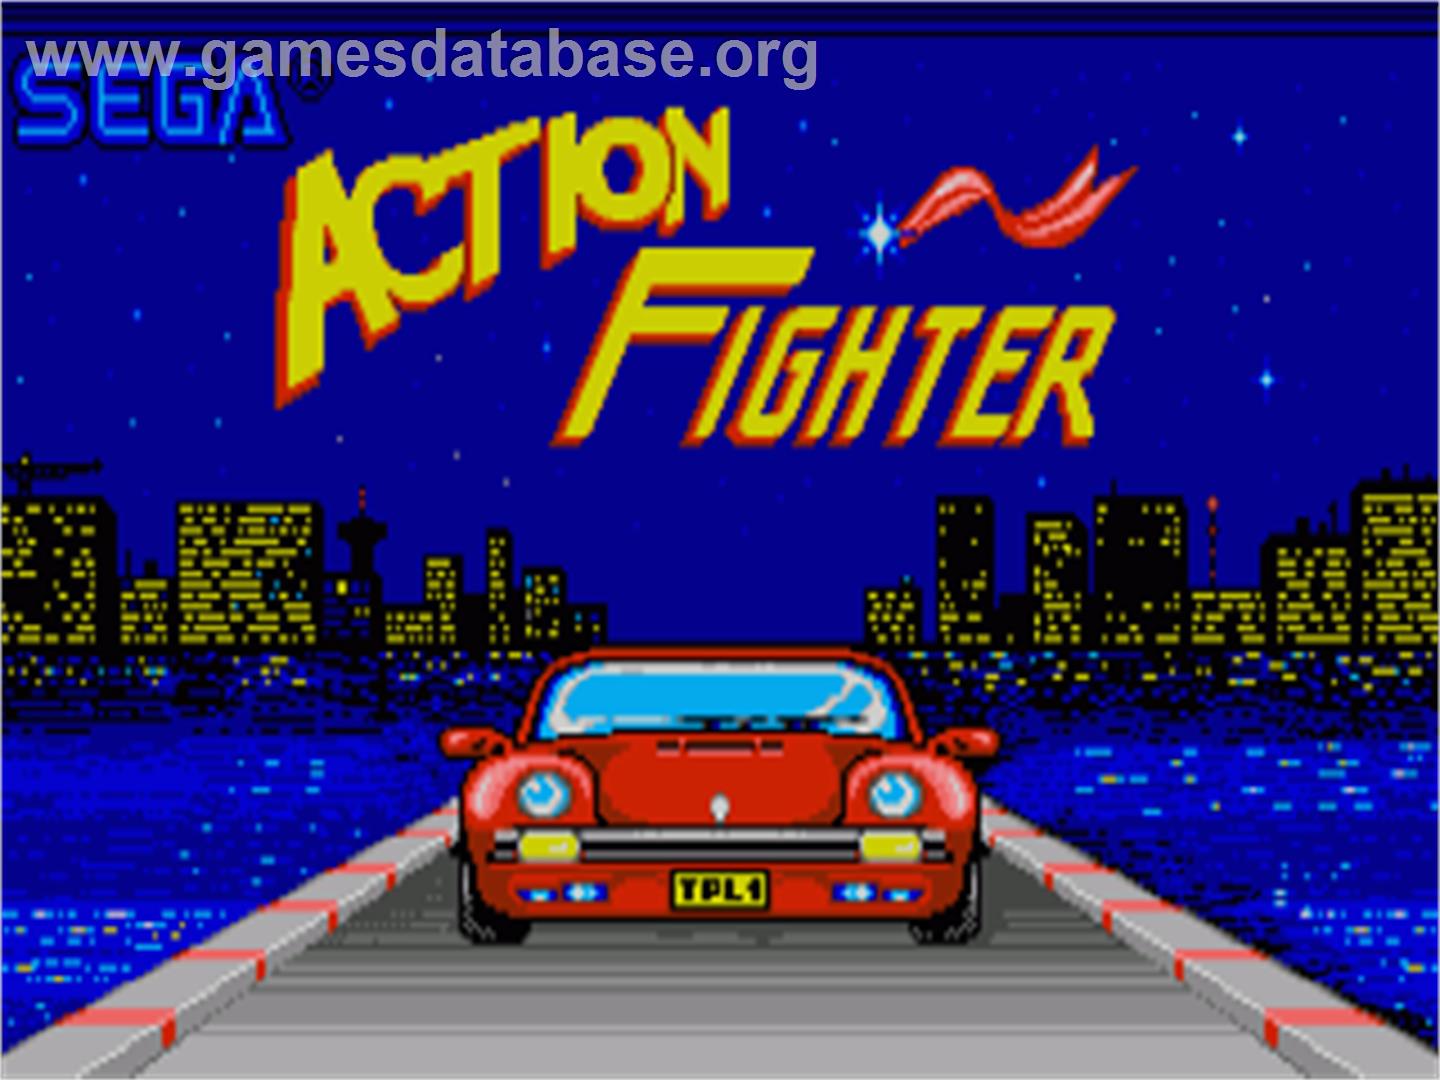 Action Fighter - Commodore Amiga - Artwork - Title Screen